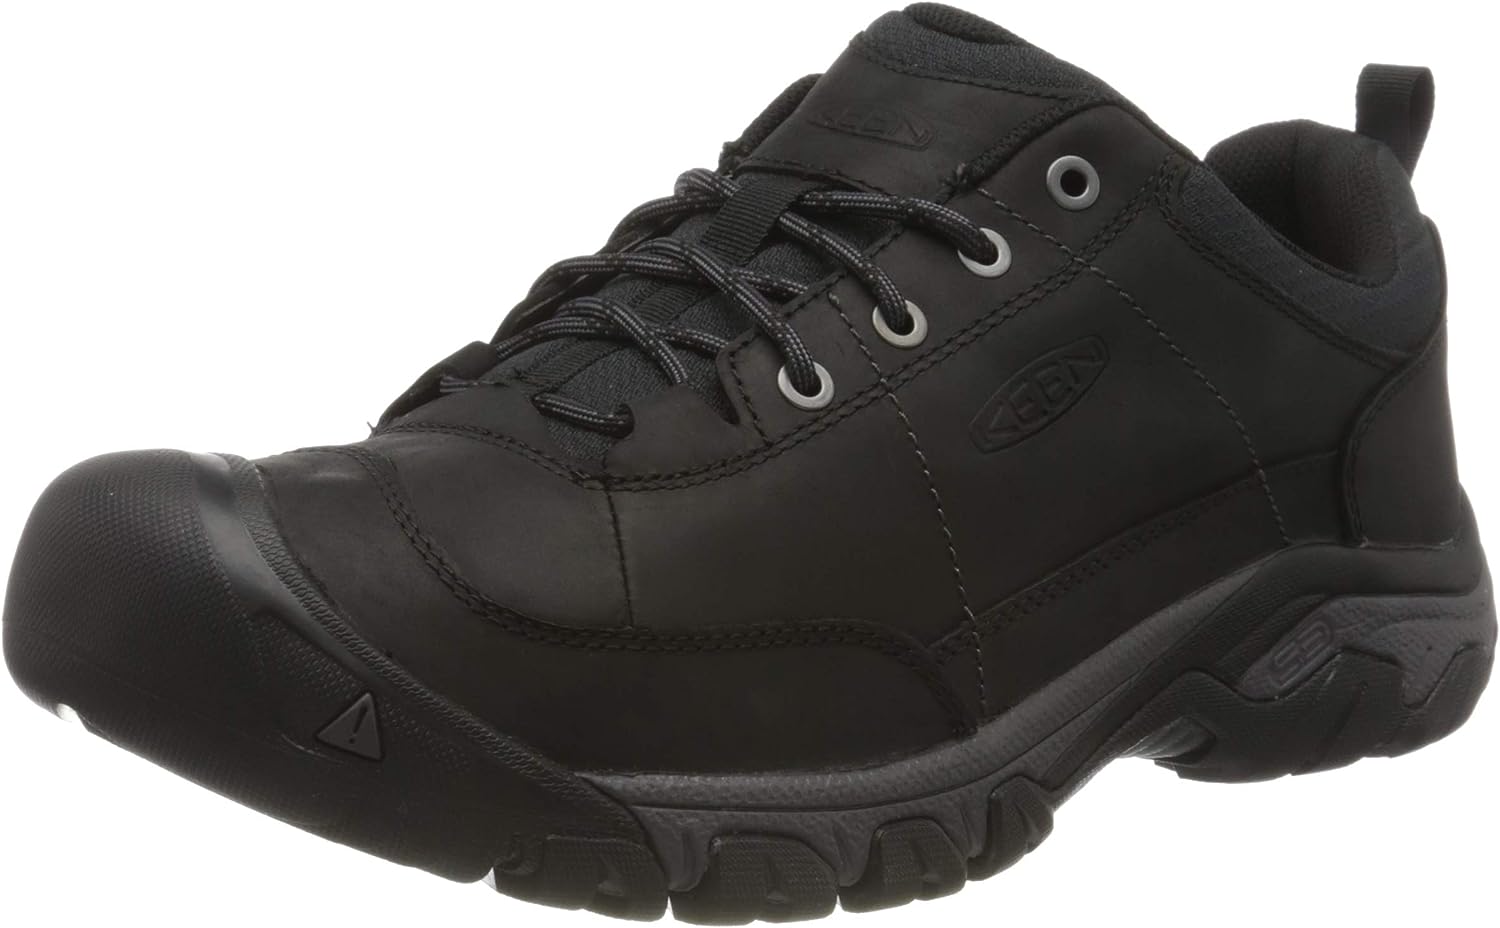 KEEN Men's Targhee 3 Oxford Casual Hiking Shoes